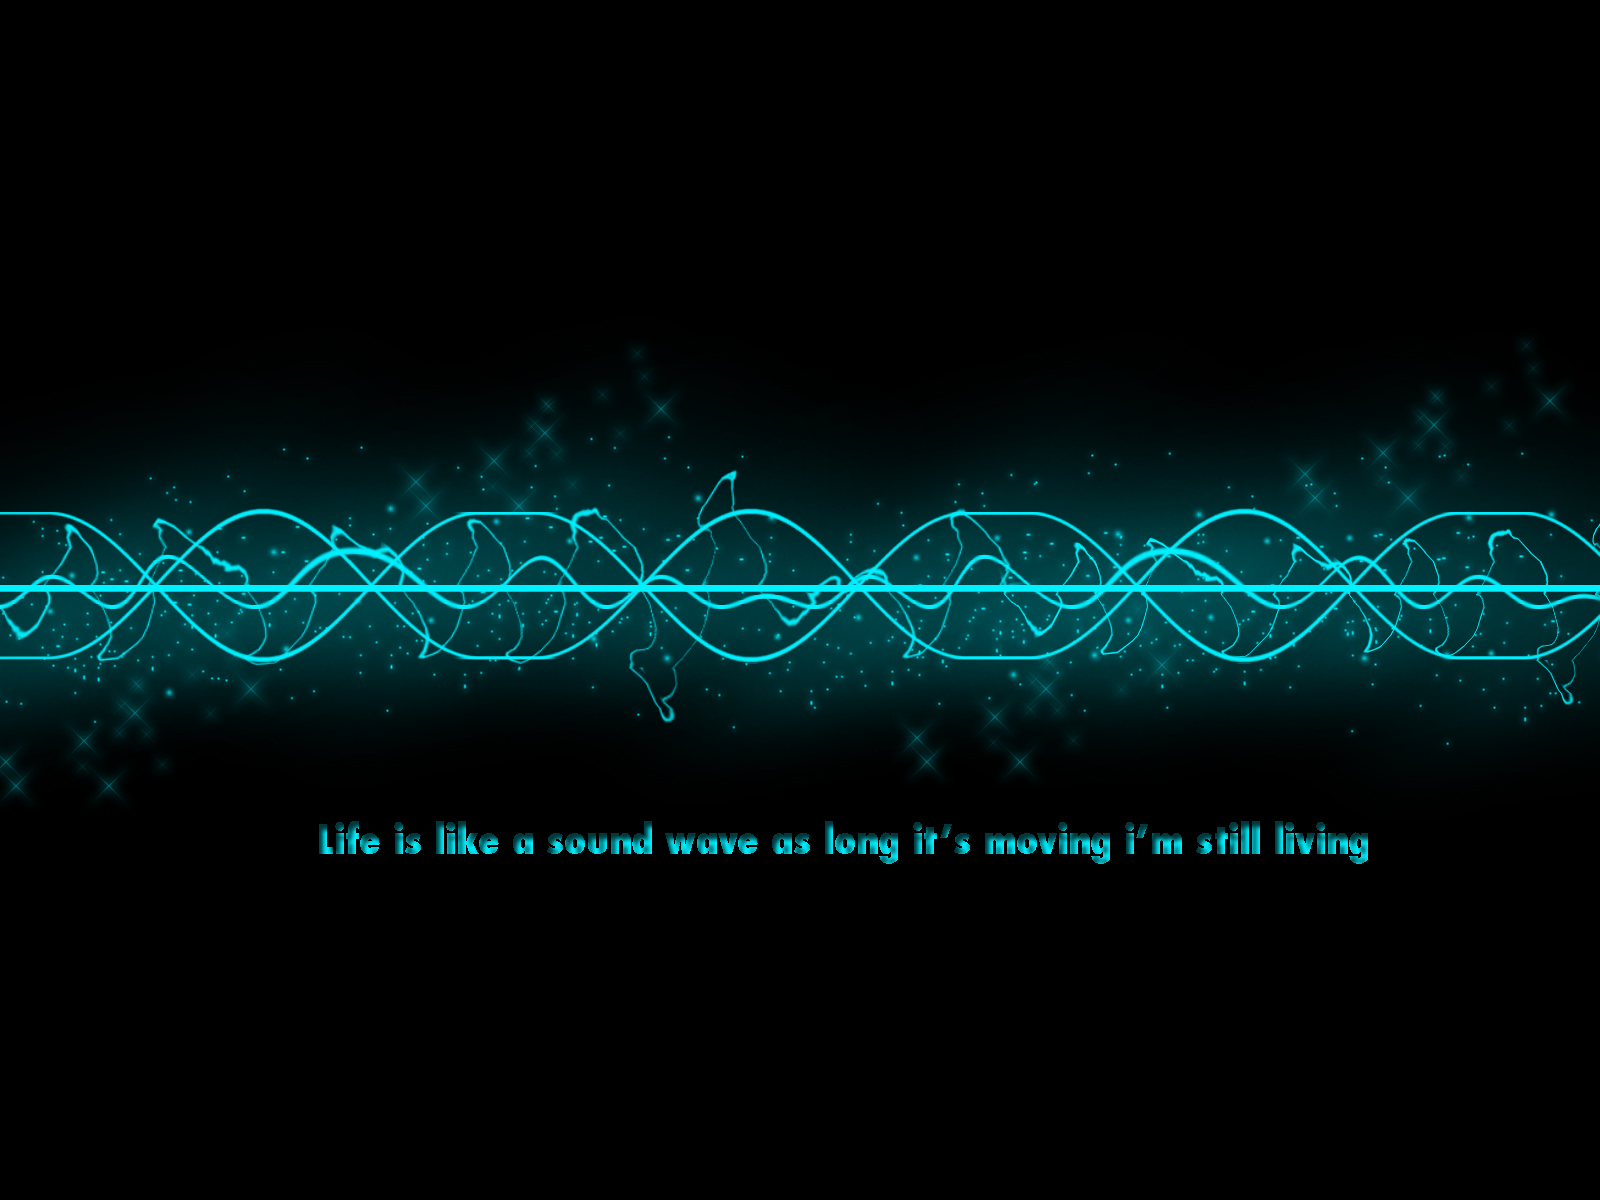 Sound Wave Is Like Life By Mar1na8